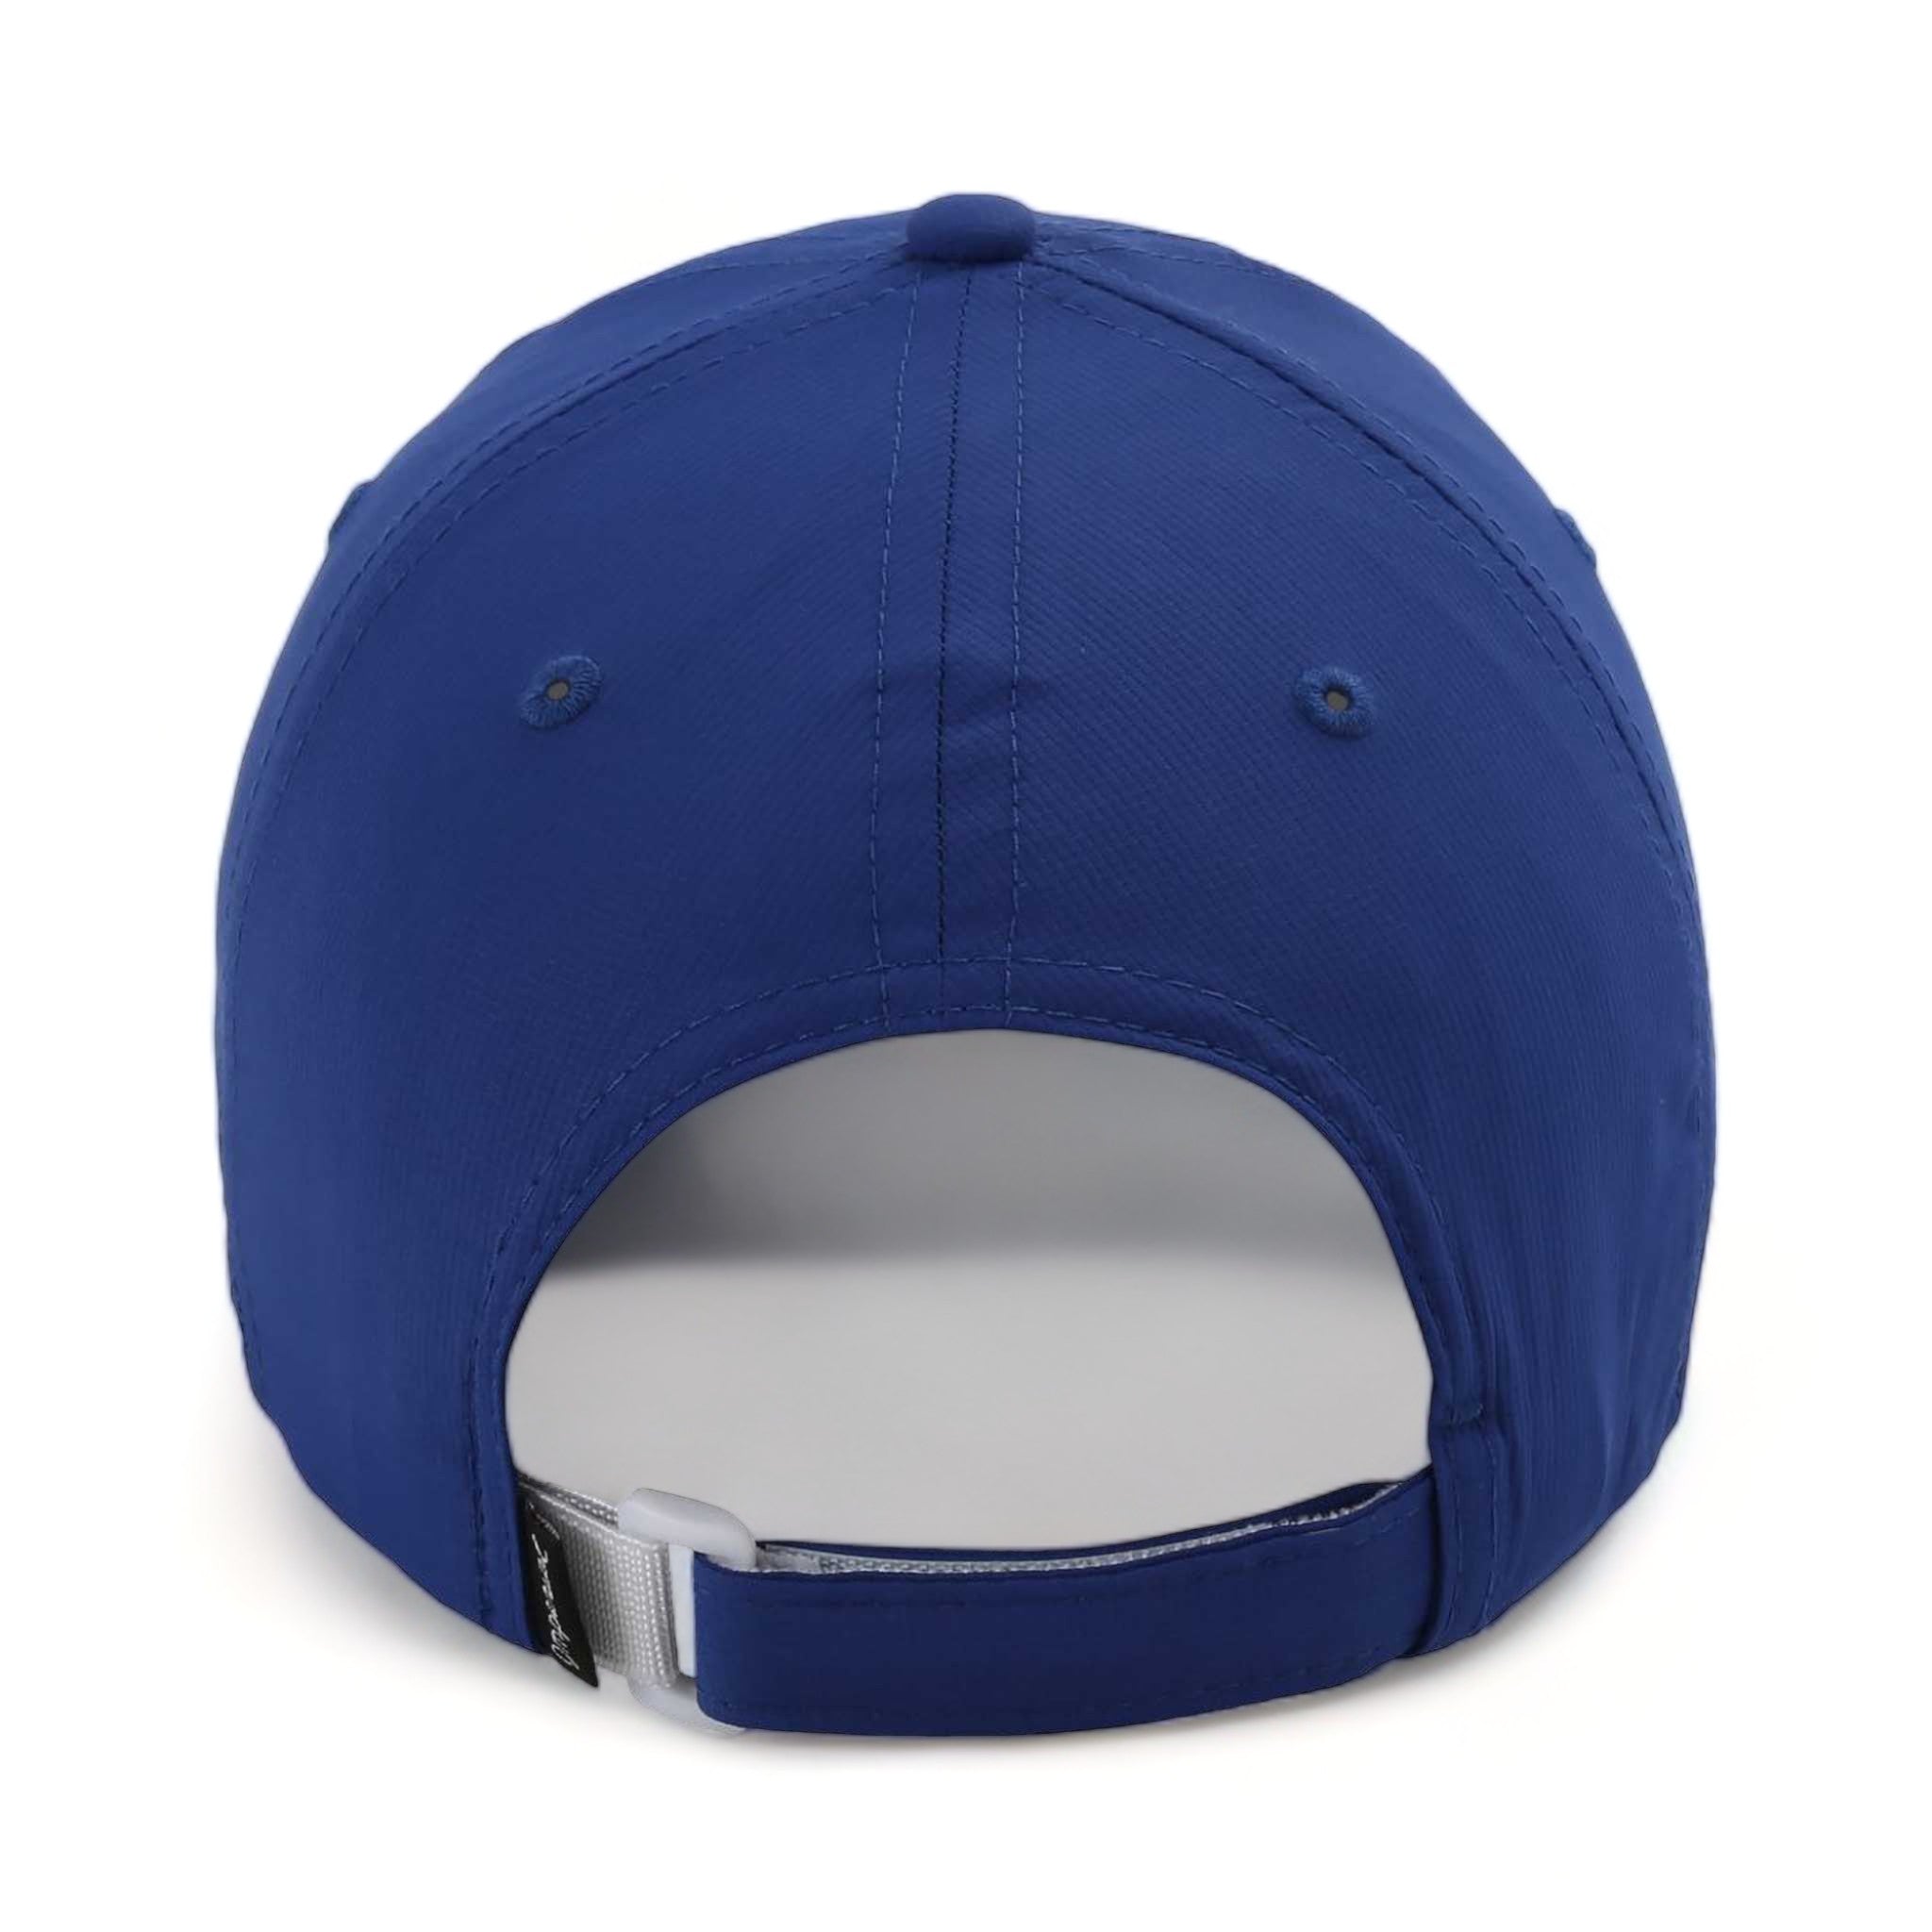 Back view of Imperial X210P custom hat in cobalt